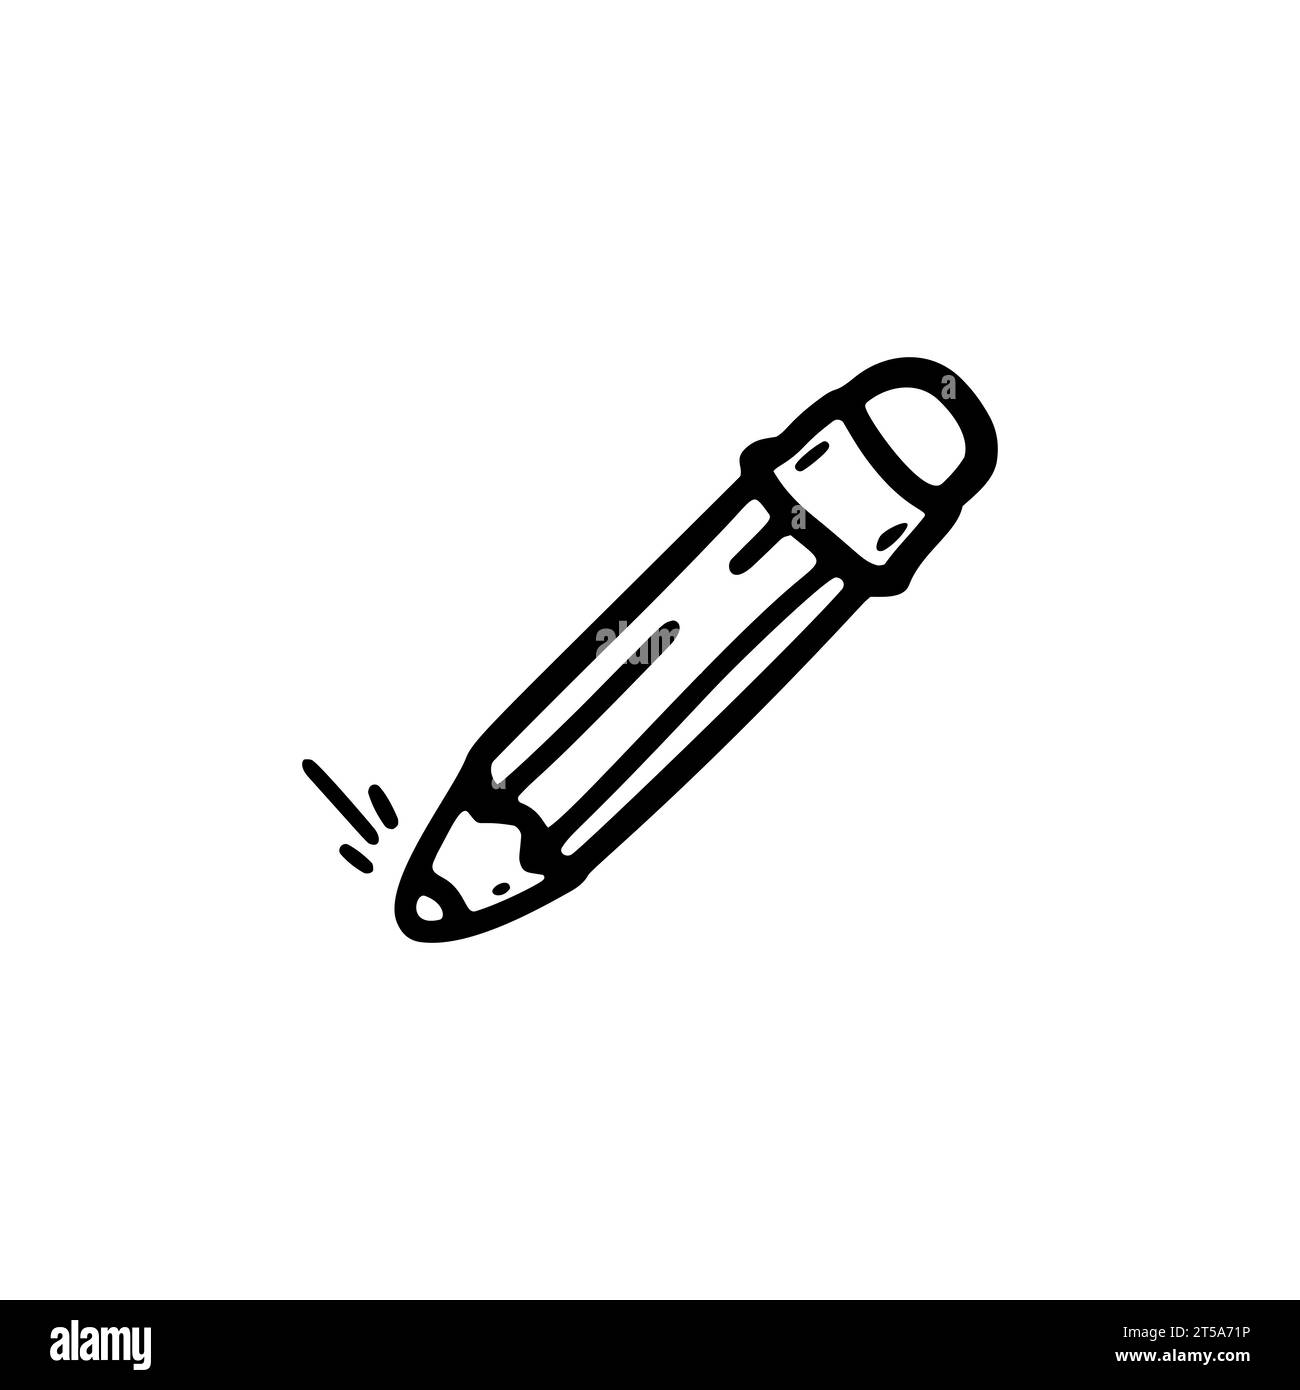 Doodle pencil icon. Hand drawn vector illustration Stock Vector